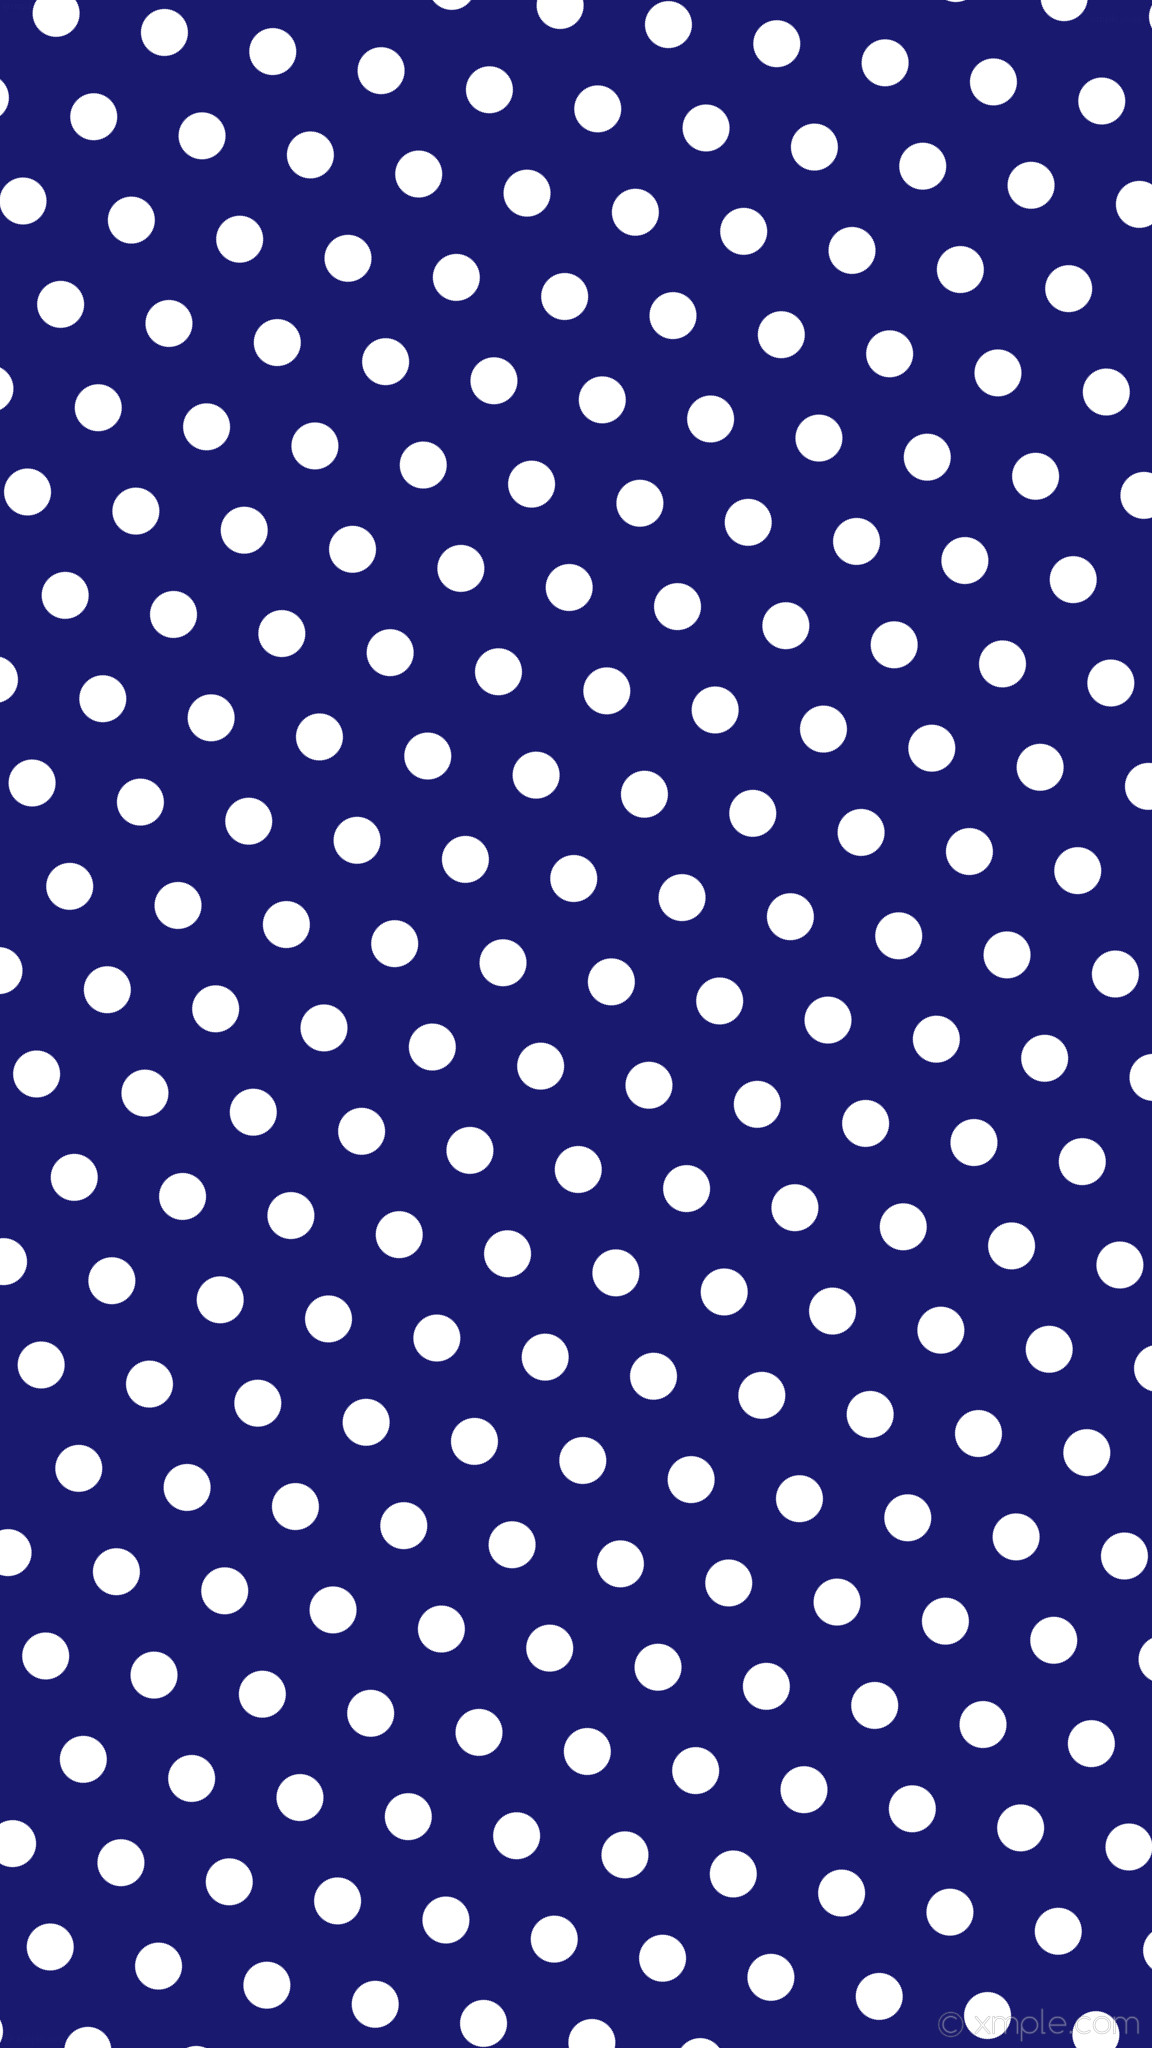 1152x2048 wallpaper hexagon white polka dots blue midnight blue #191970 #ffffff  diagonal 50Â° 47px